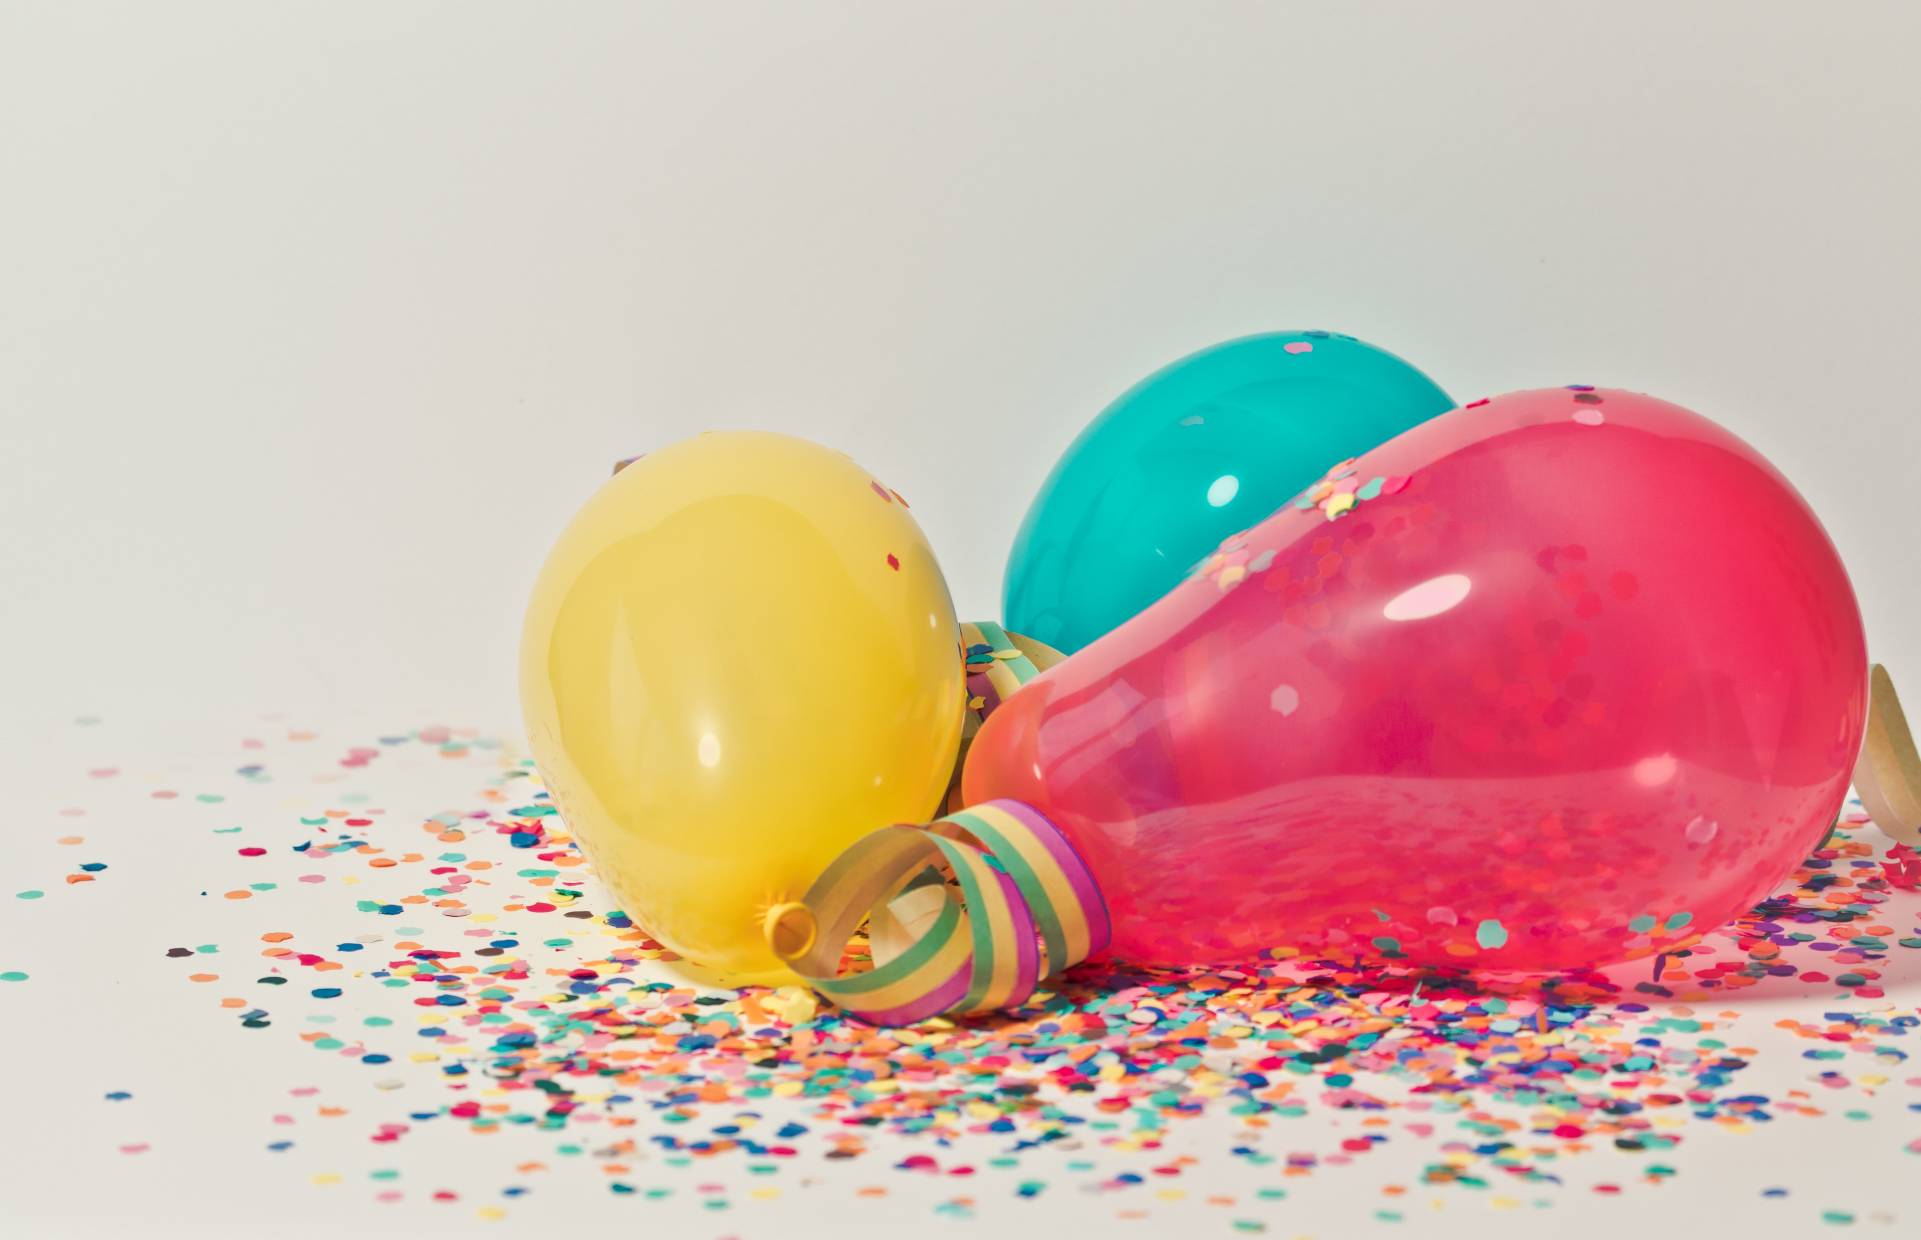 Foto von Ylanite Koppens: https://www.pexels.com/de-de/foto/bunte-luftballons-mit-konfetti-796606/